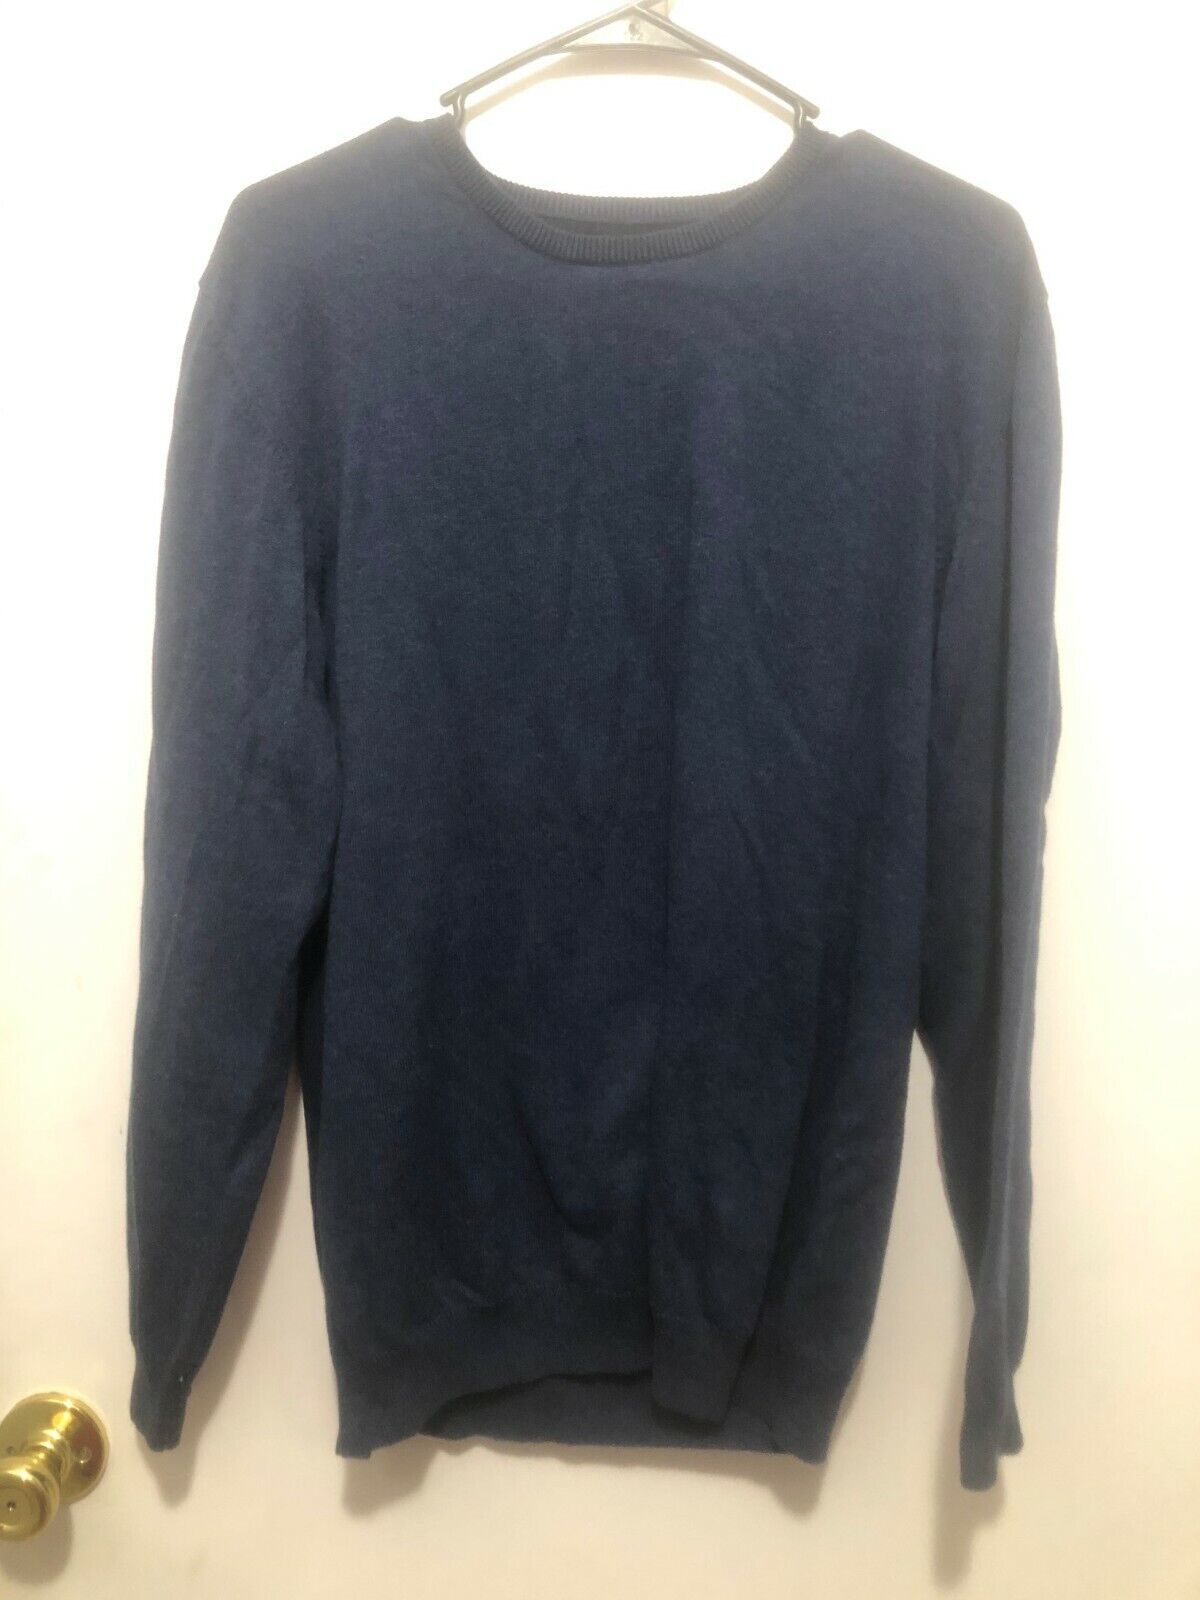 NEW Burton's Of London Men's Cotton Pullover Light Sweater Crew Neck Blue Large - $18.80